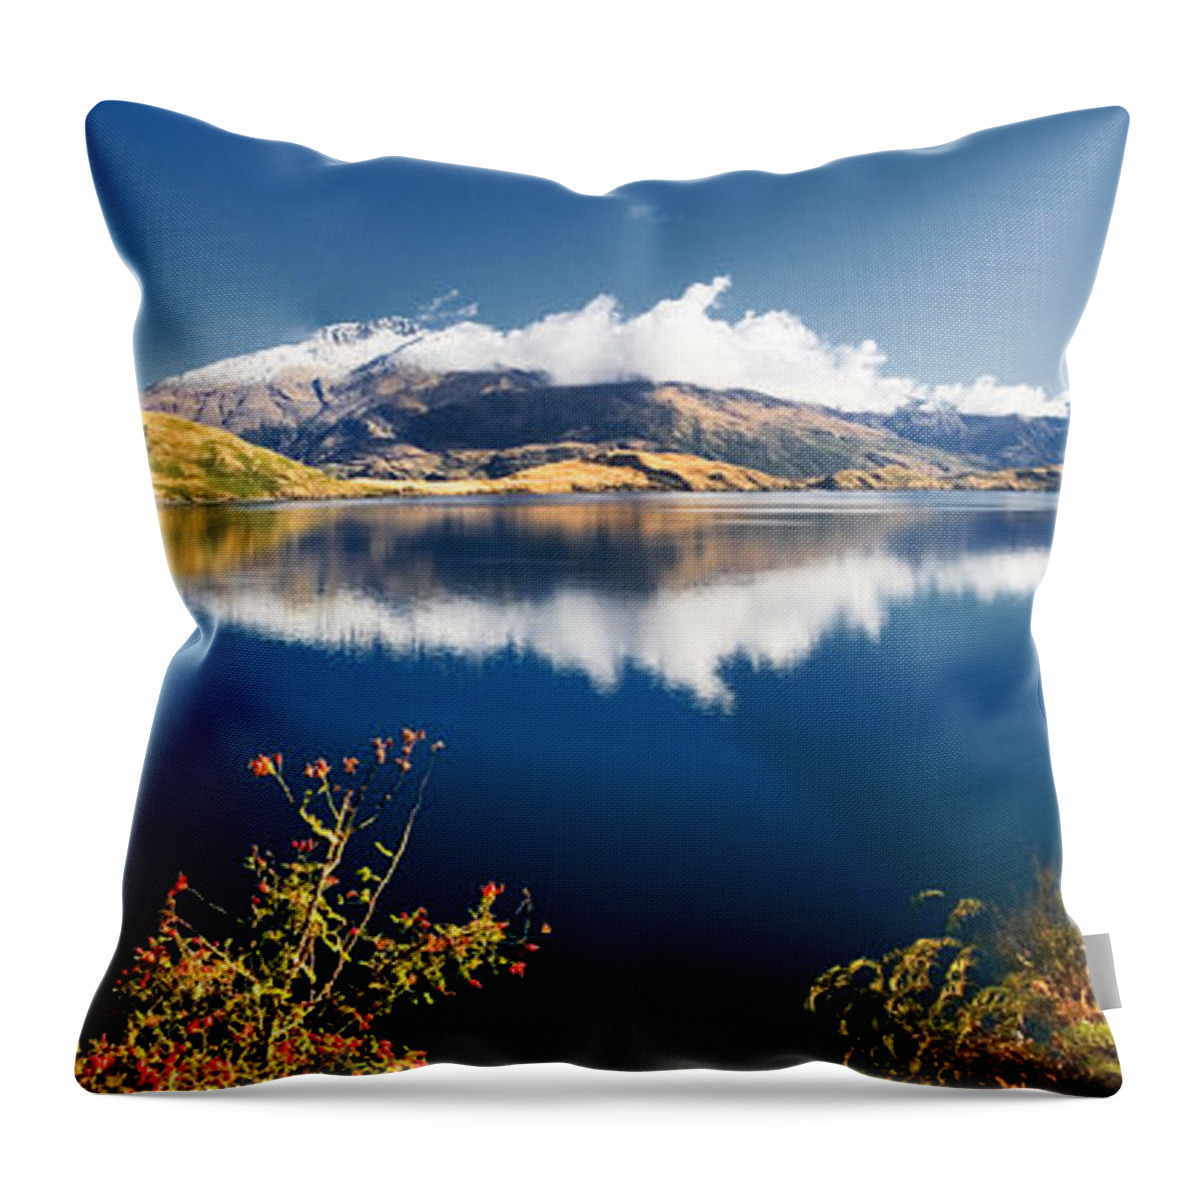 New Zealand Throw Pillow featuring the photograph Lake Wanaka New Zealand by Sheila Smart Fine Art Photography